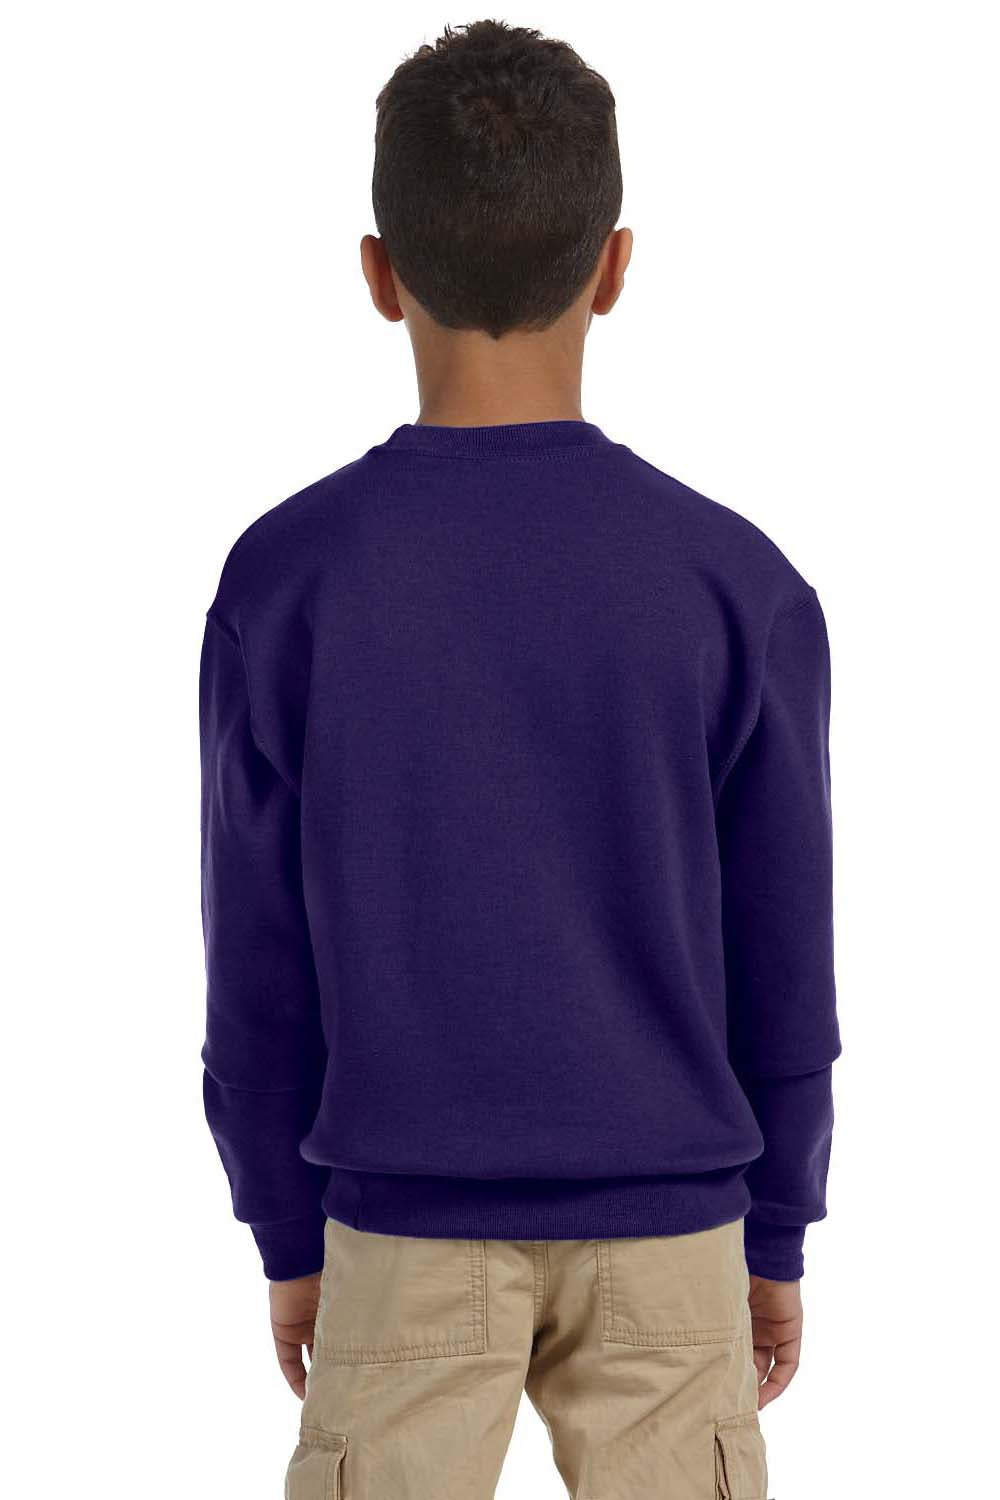 Jerzees 562B Youth NuBlend Fleece Crewneck Sweatshirt Purple Back